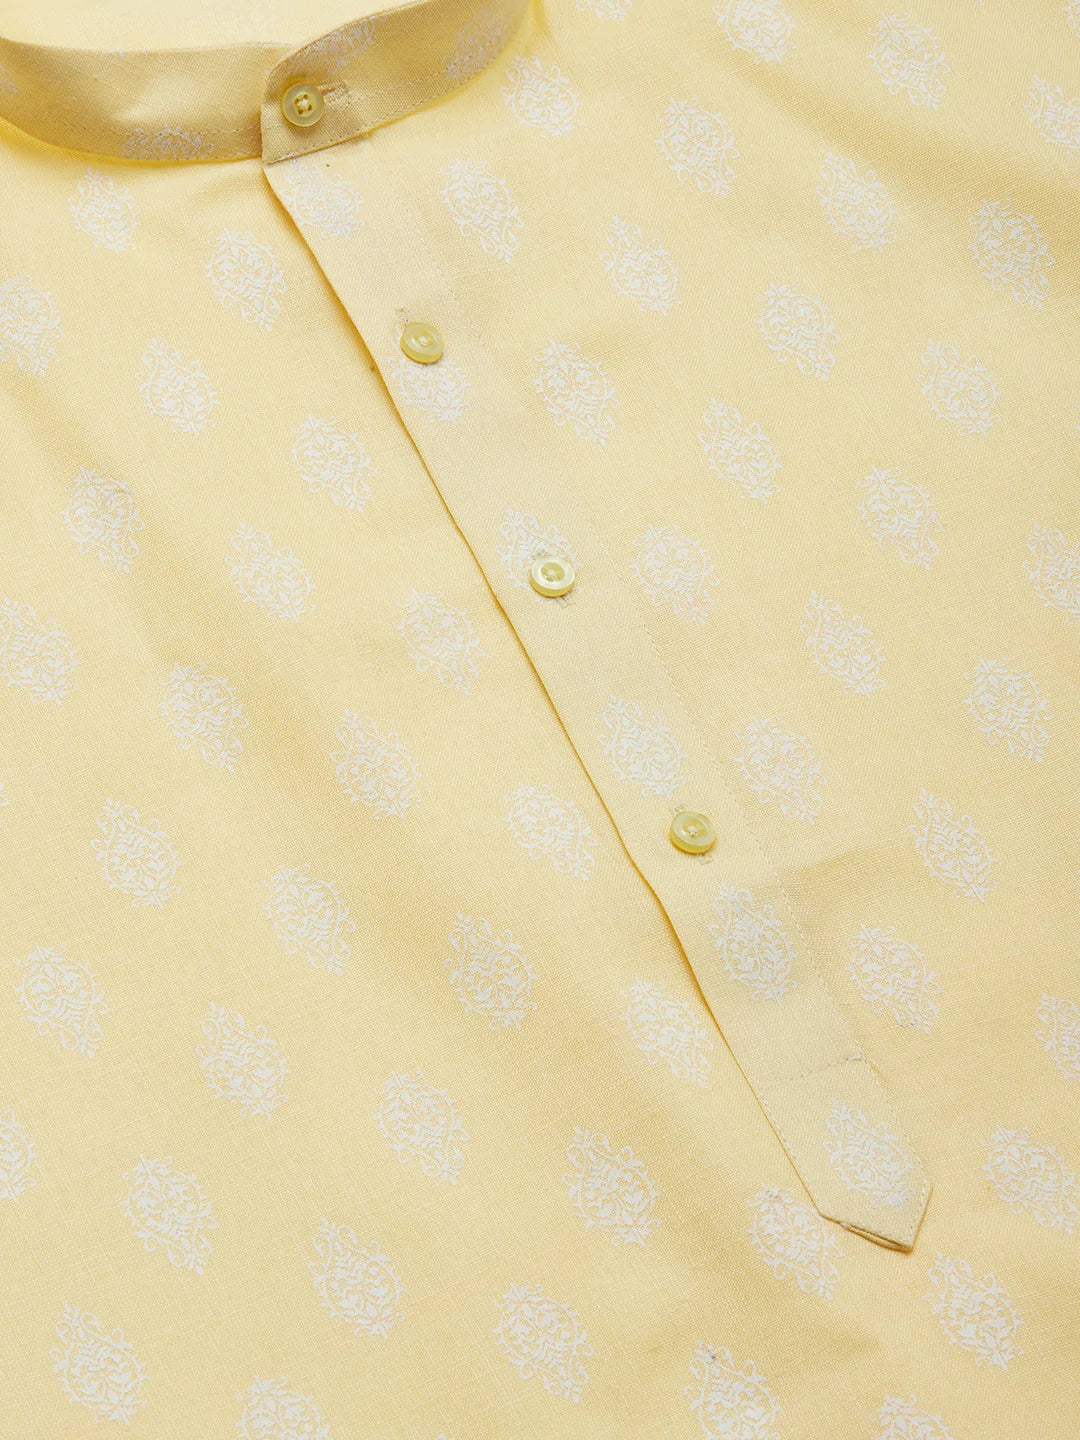 Jompers Men's Yellow Cotton Floral printed kurta Pyjama Set ( JOKP 650 Yellow )